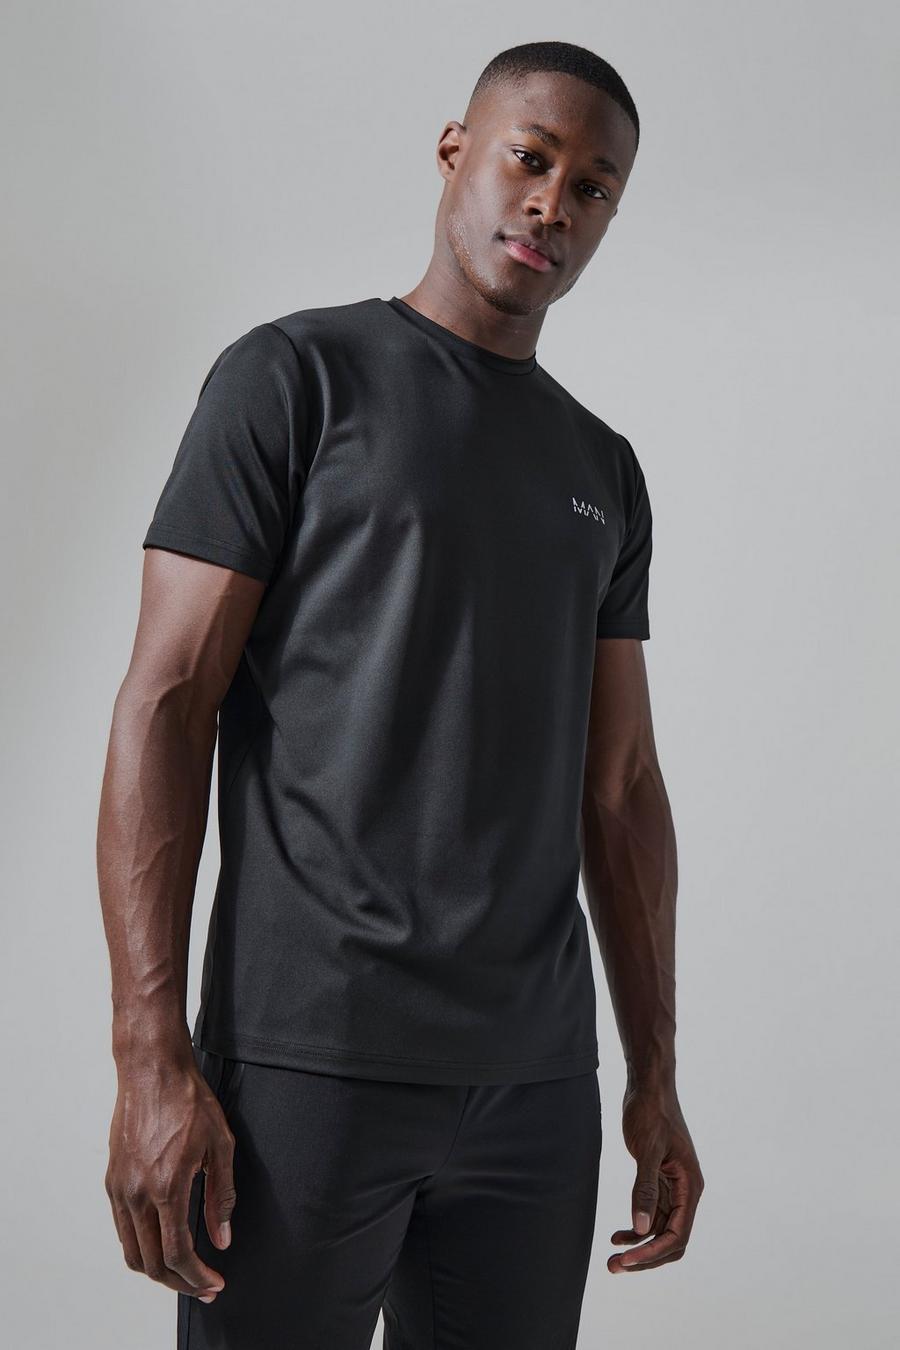 Man Active Performance Sport T-Shirt, Black